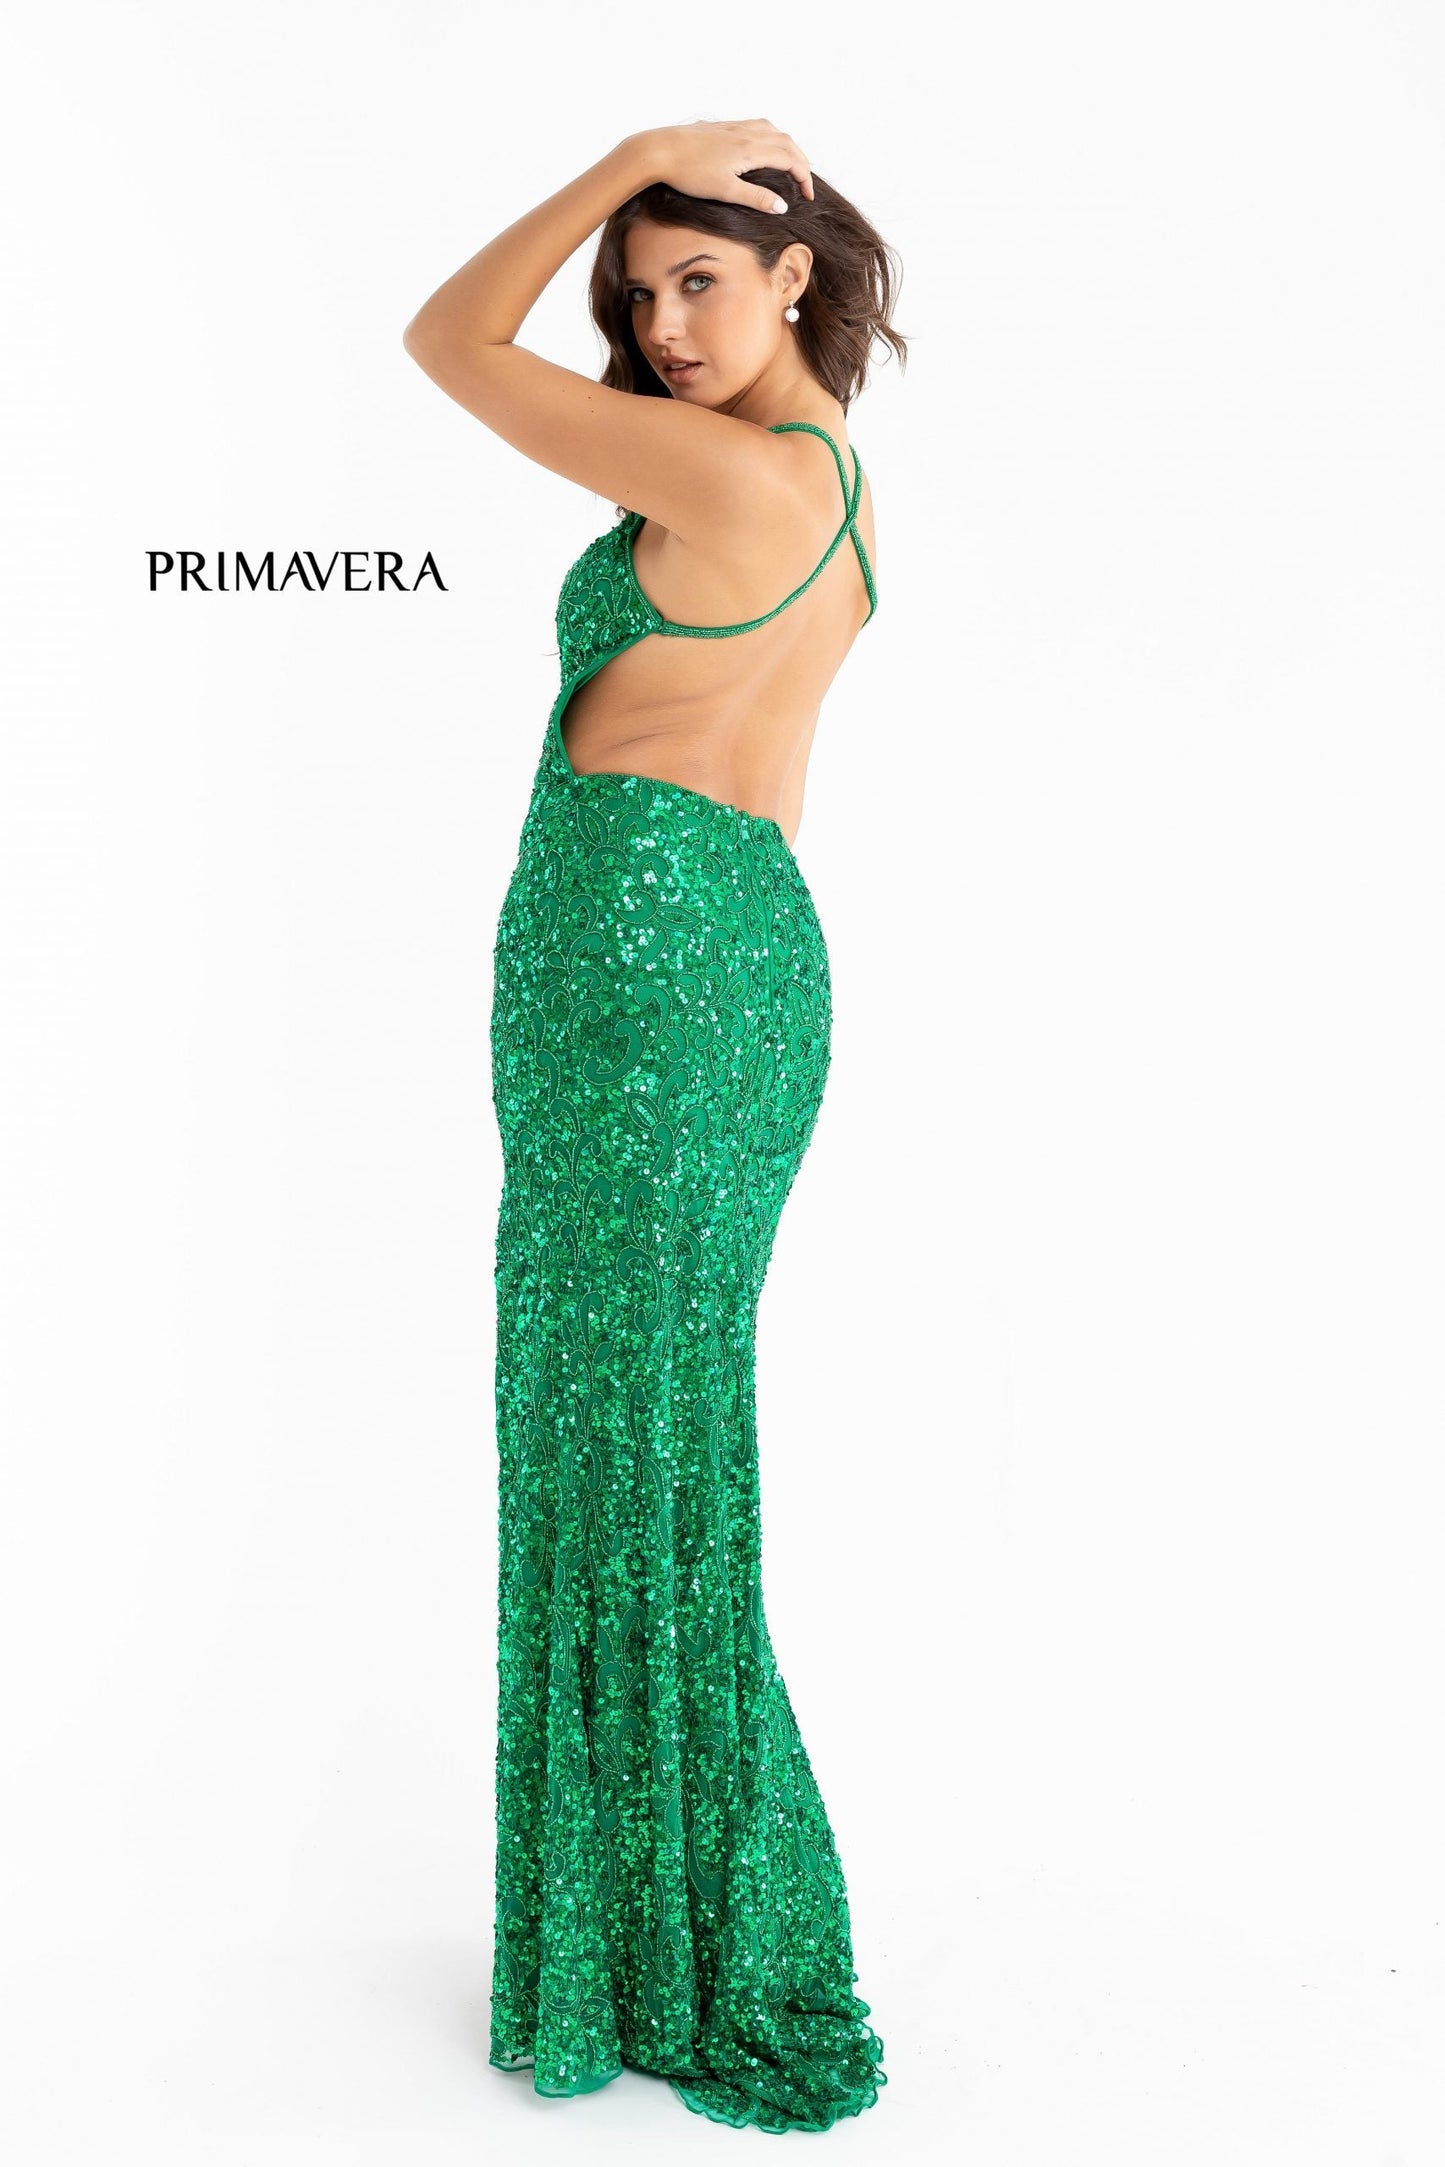 Primavera Couture 3295 Size 0 & 6 Neon Coral Prom Dress V Neckline Sequins Backless Slit Formal Evening Gown